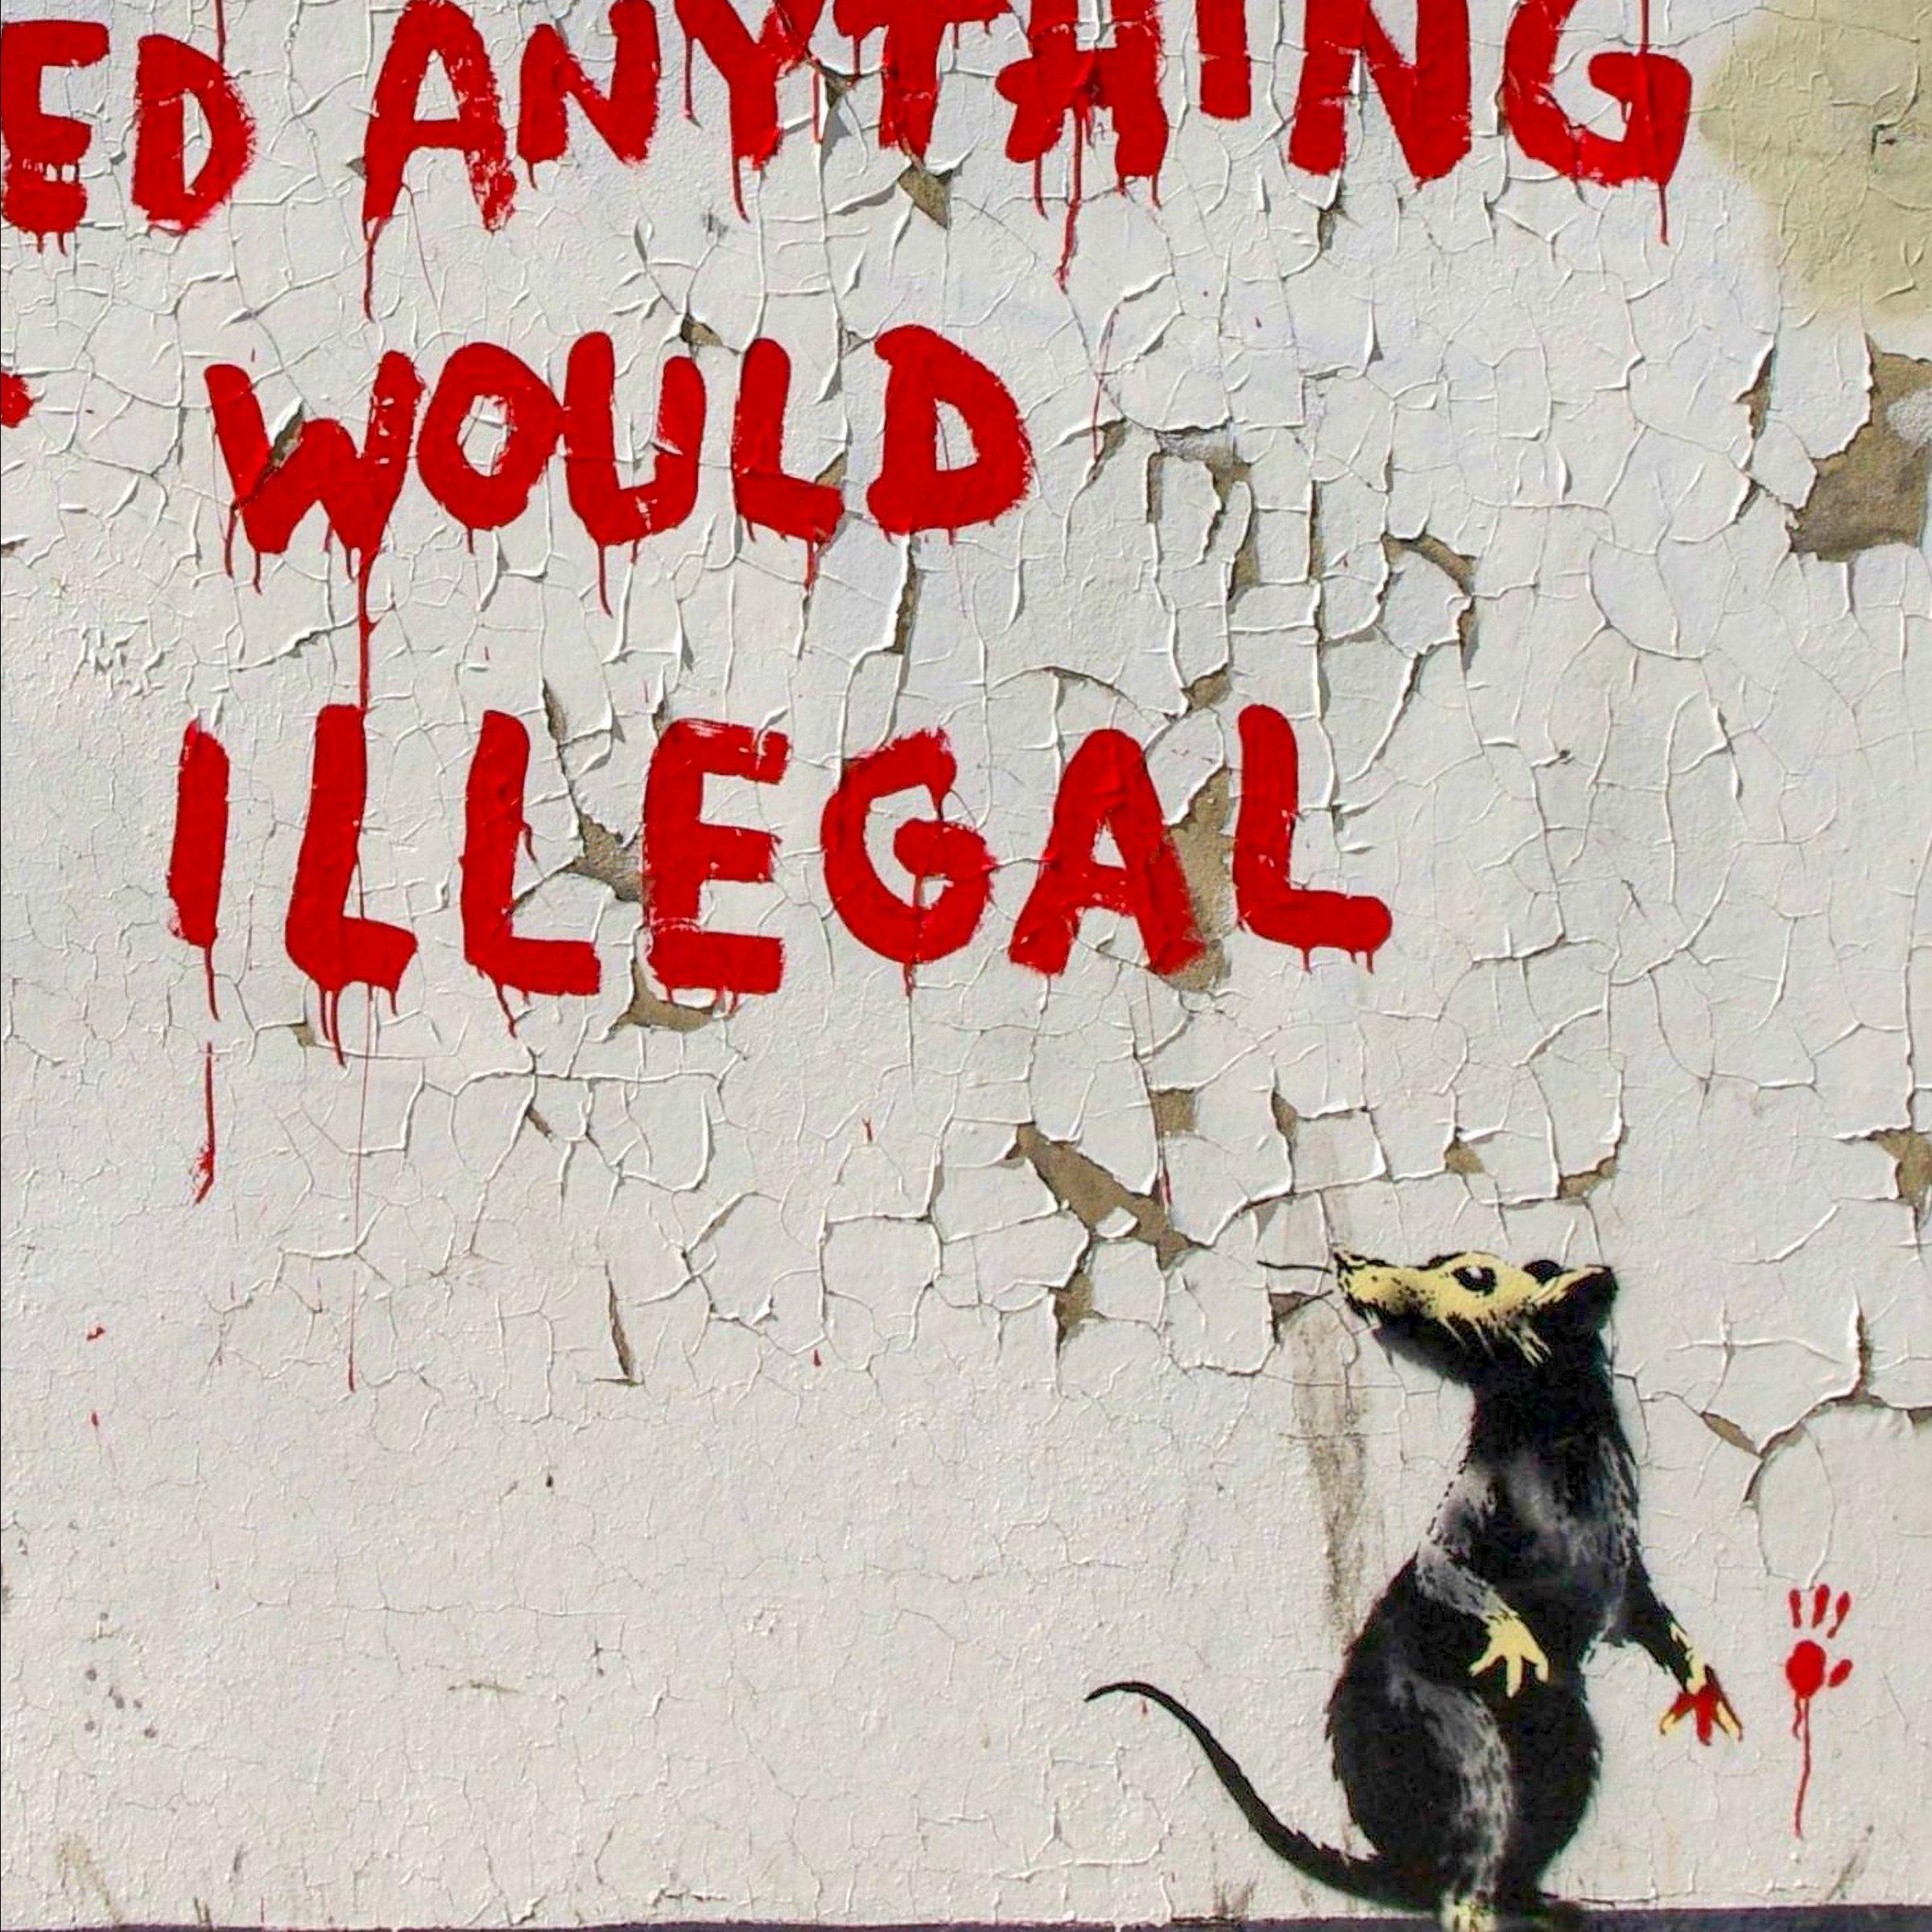 Banksy - If Graffiti Changed Anything It Would Be Illegal Wall Art Canvas - SharpWallArts